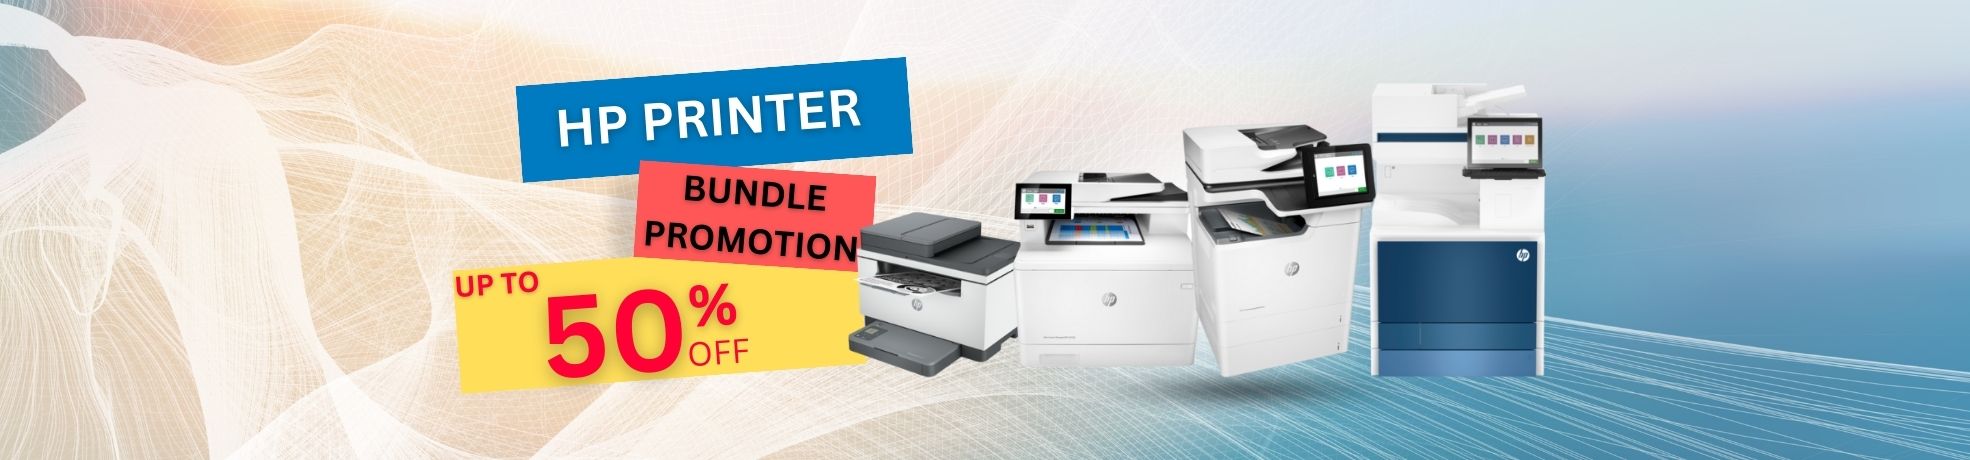 HP Printer Bundle Promotion